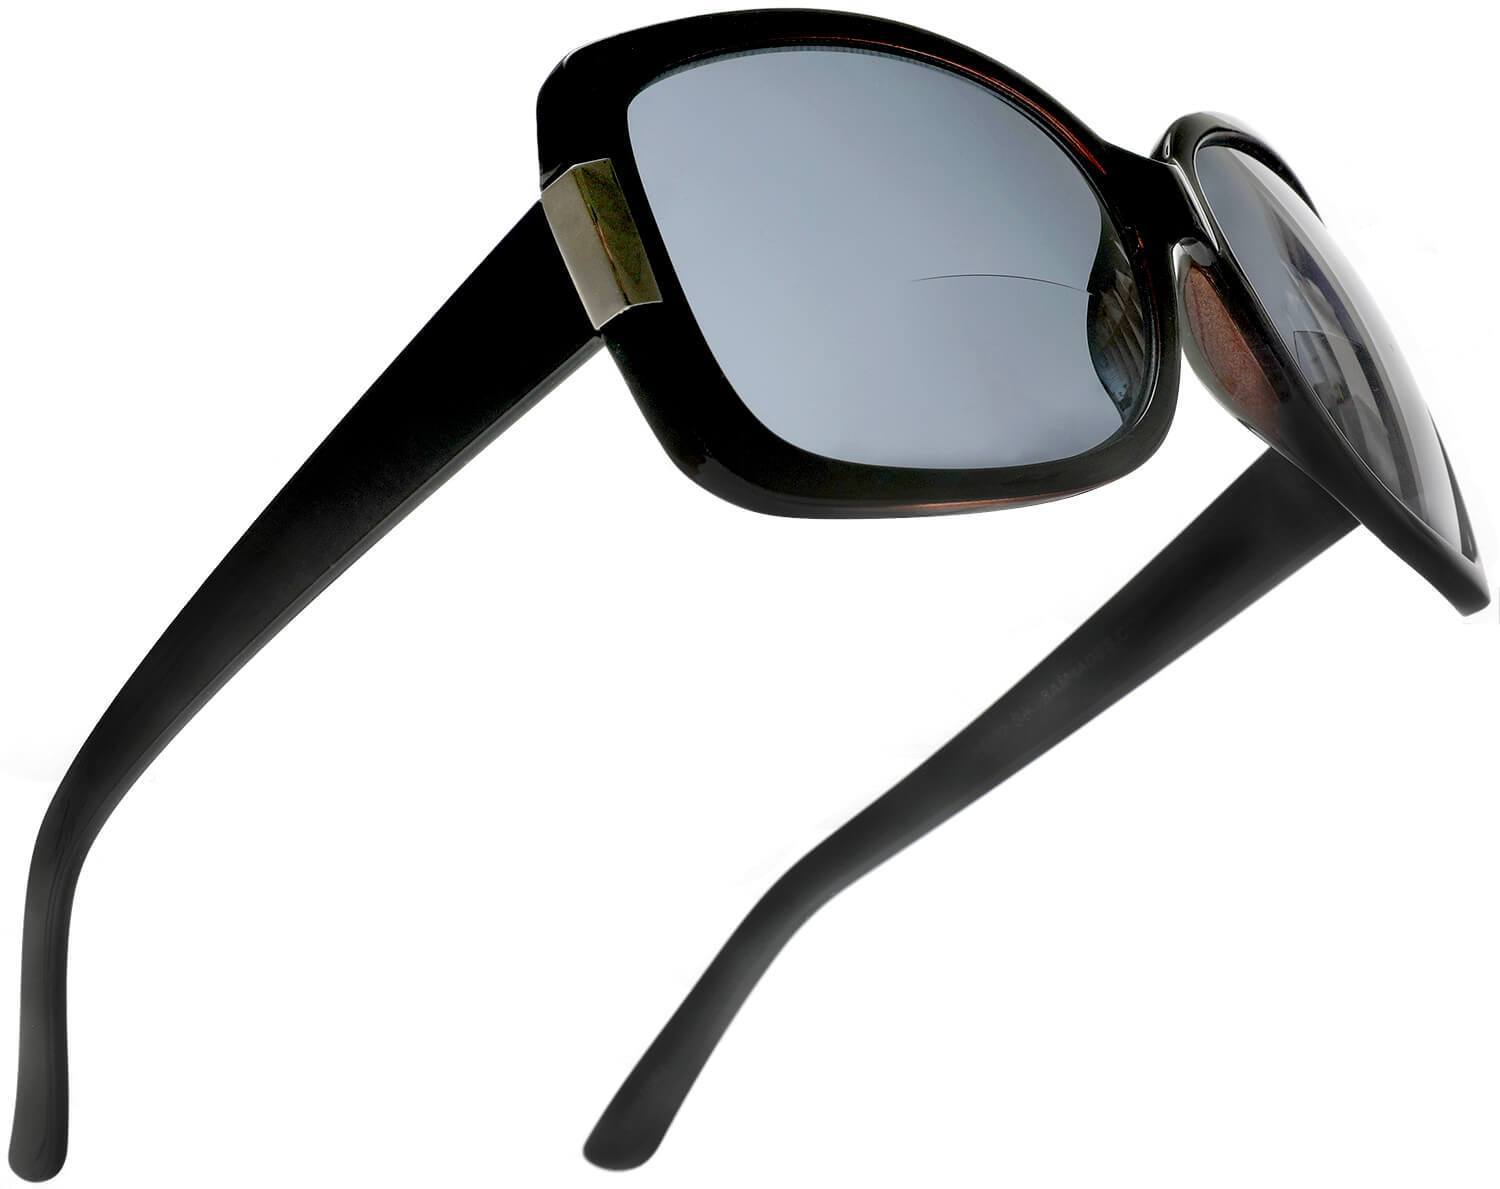 Sunglasses & Reading Sunglasses | Peepers - Peepers by PeeperSpecs